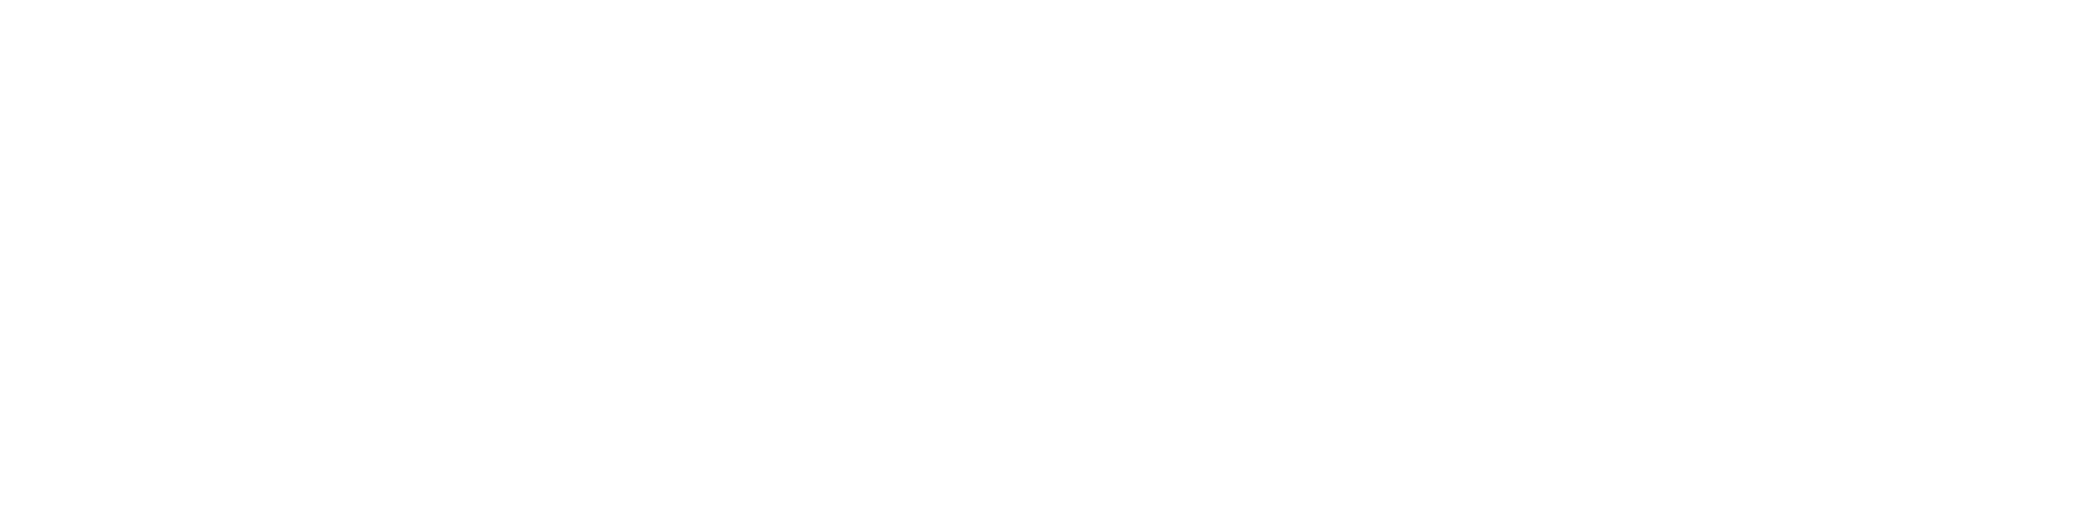 opal speech pathology logo